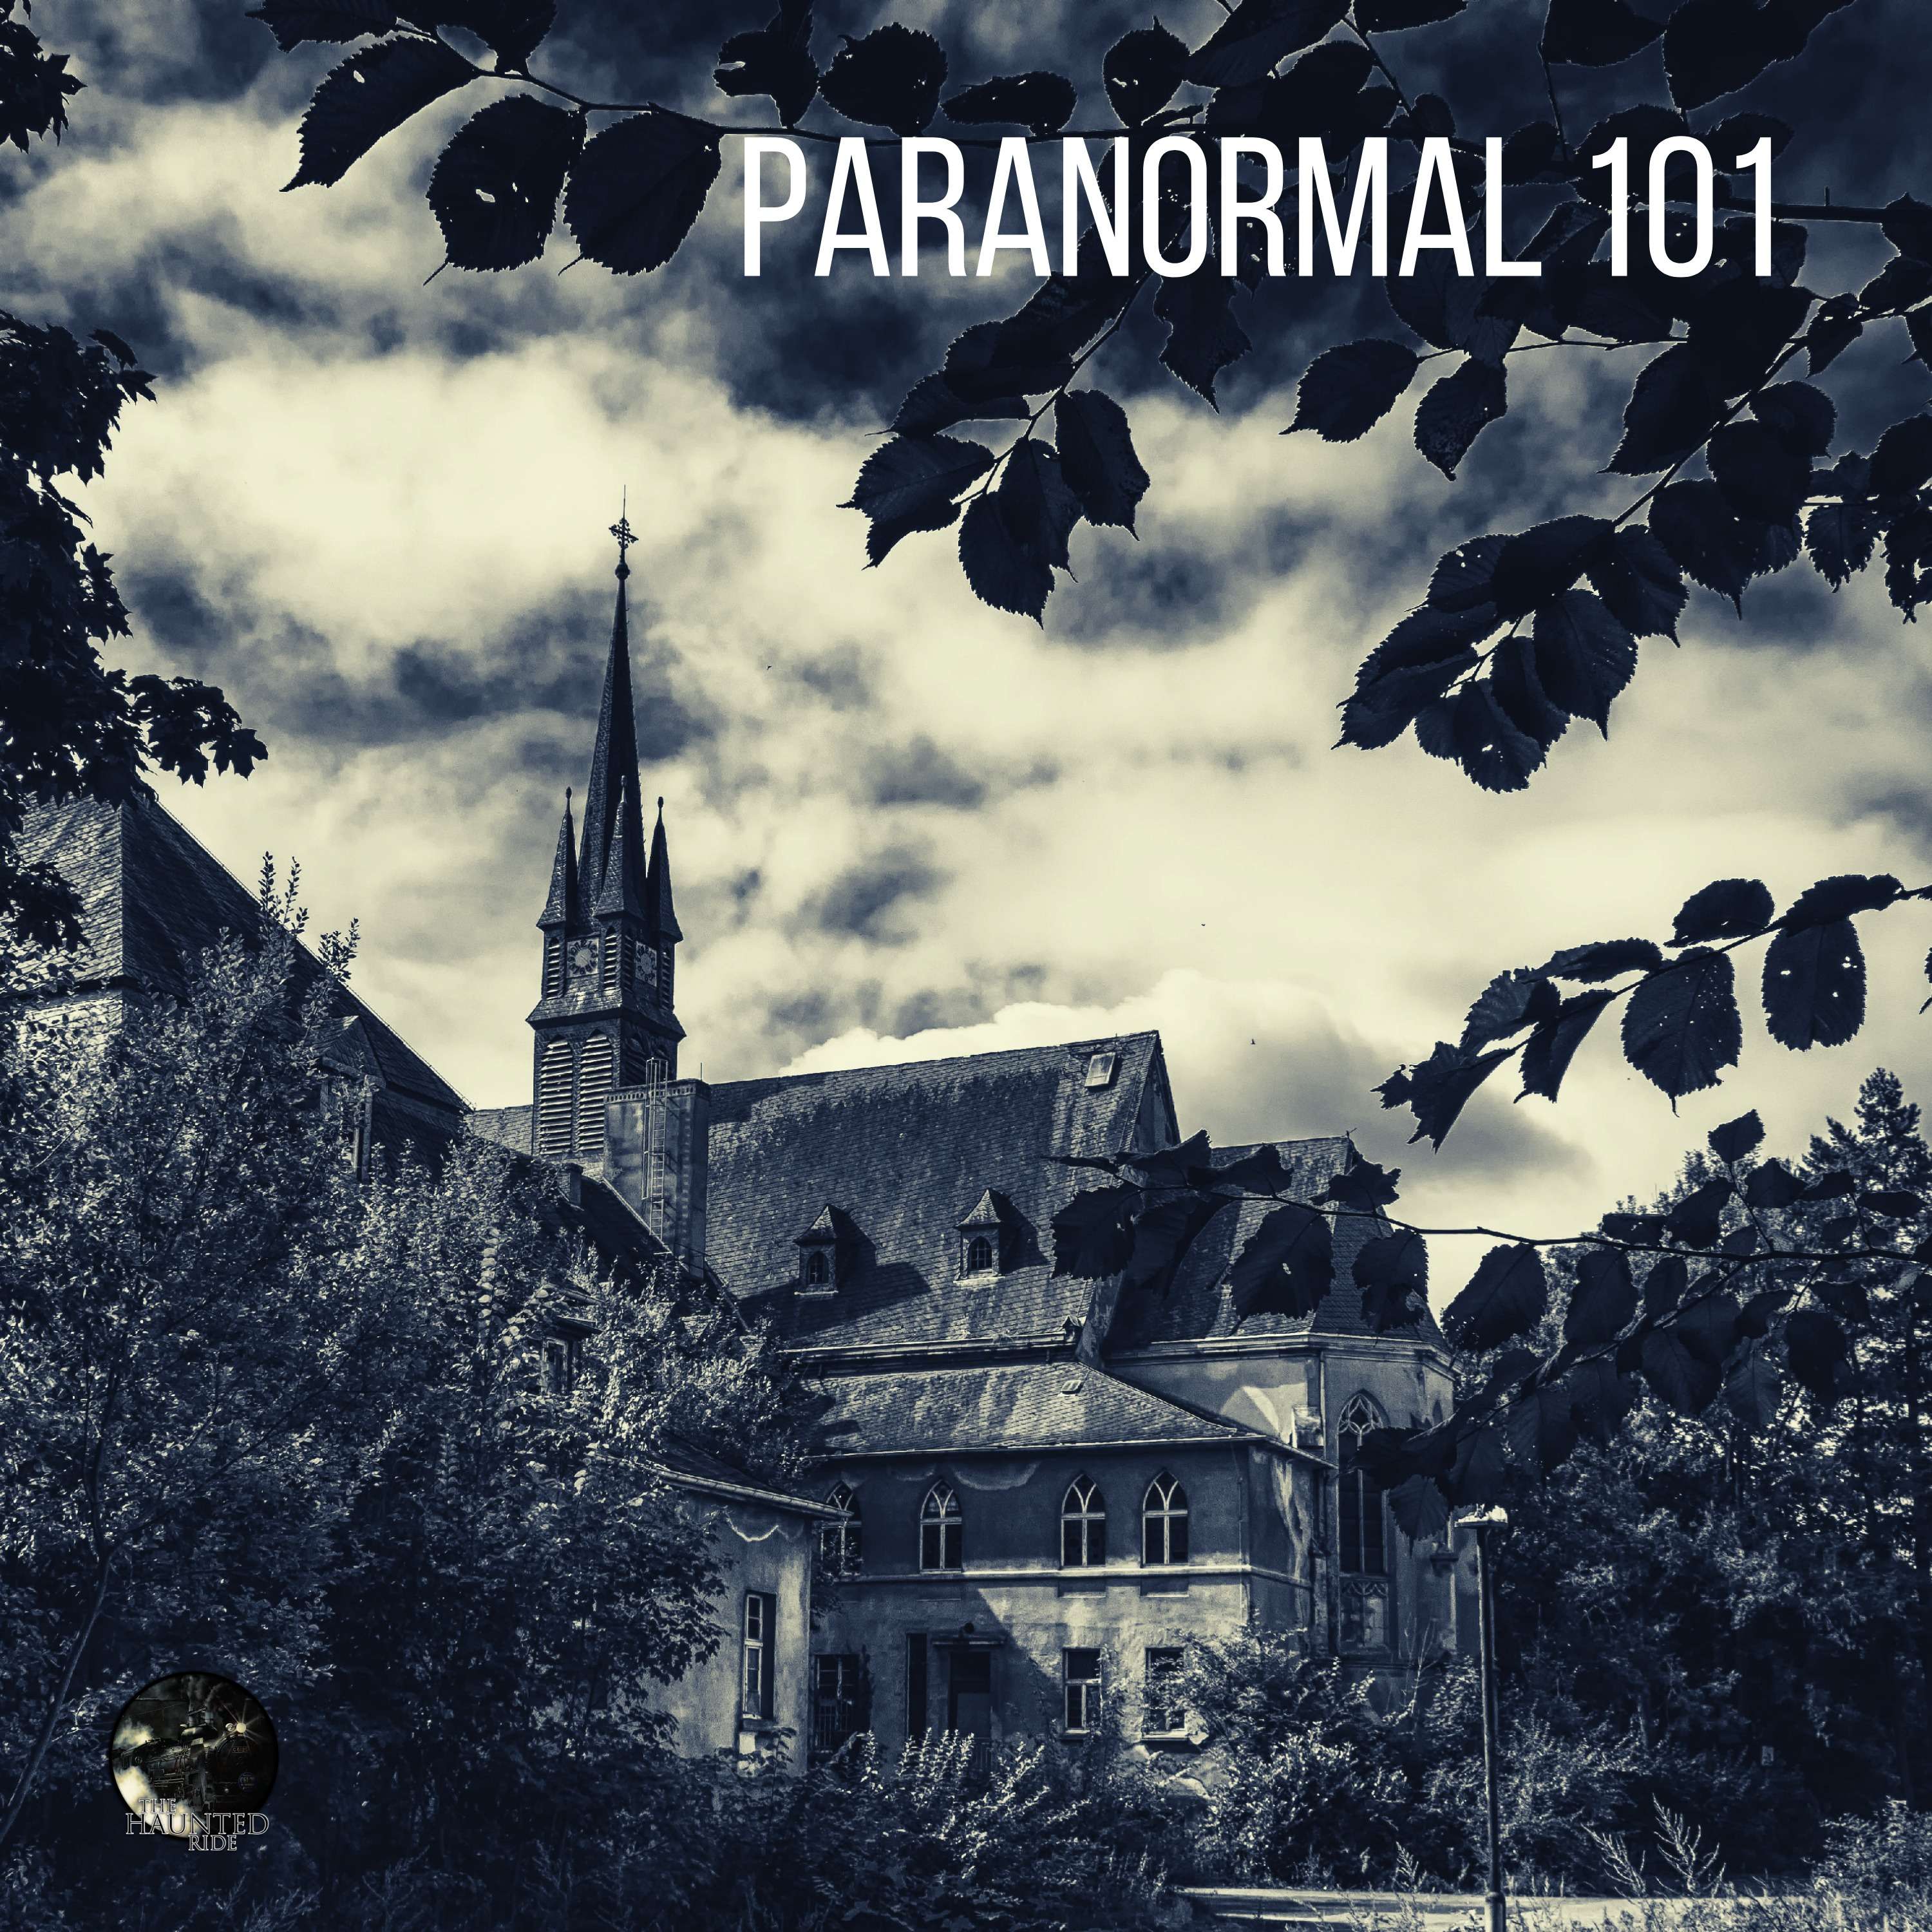 37: Paranormal 101